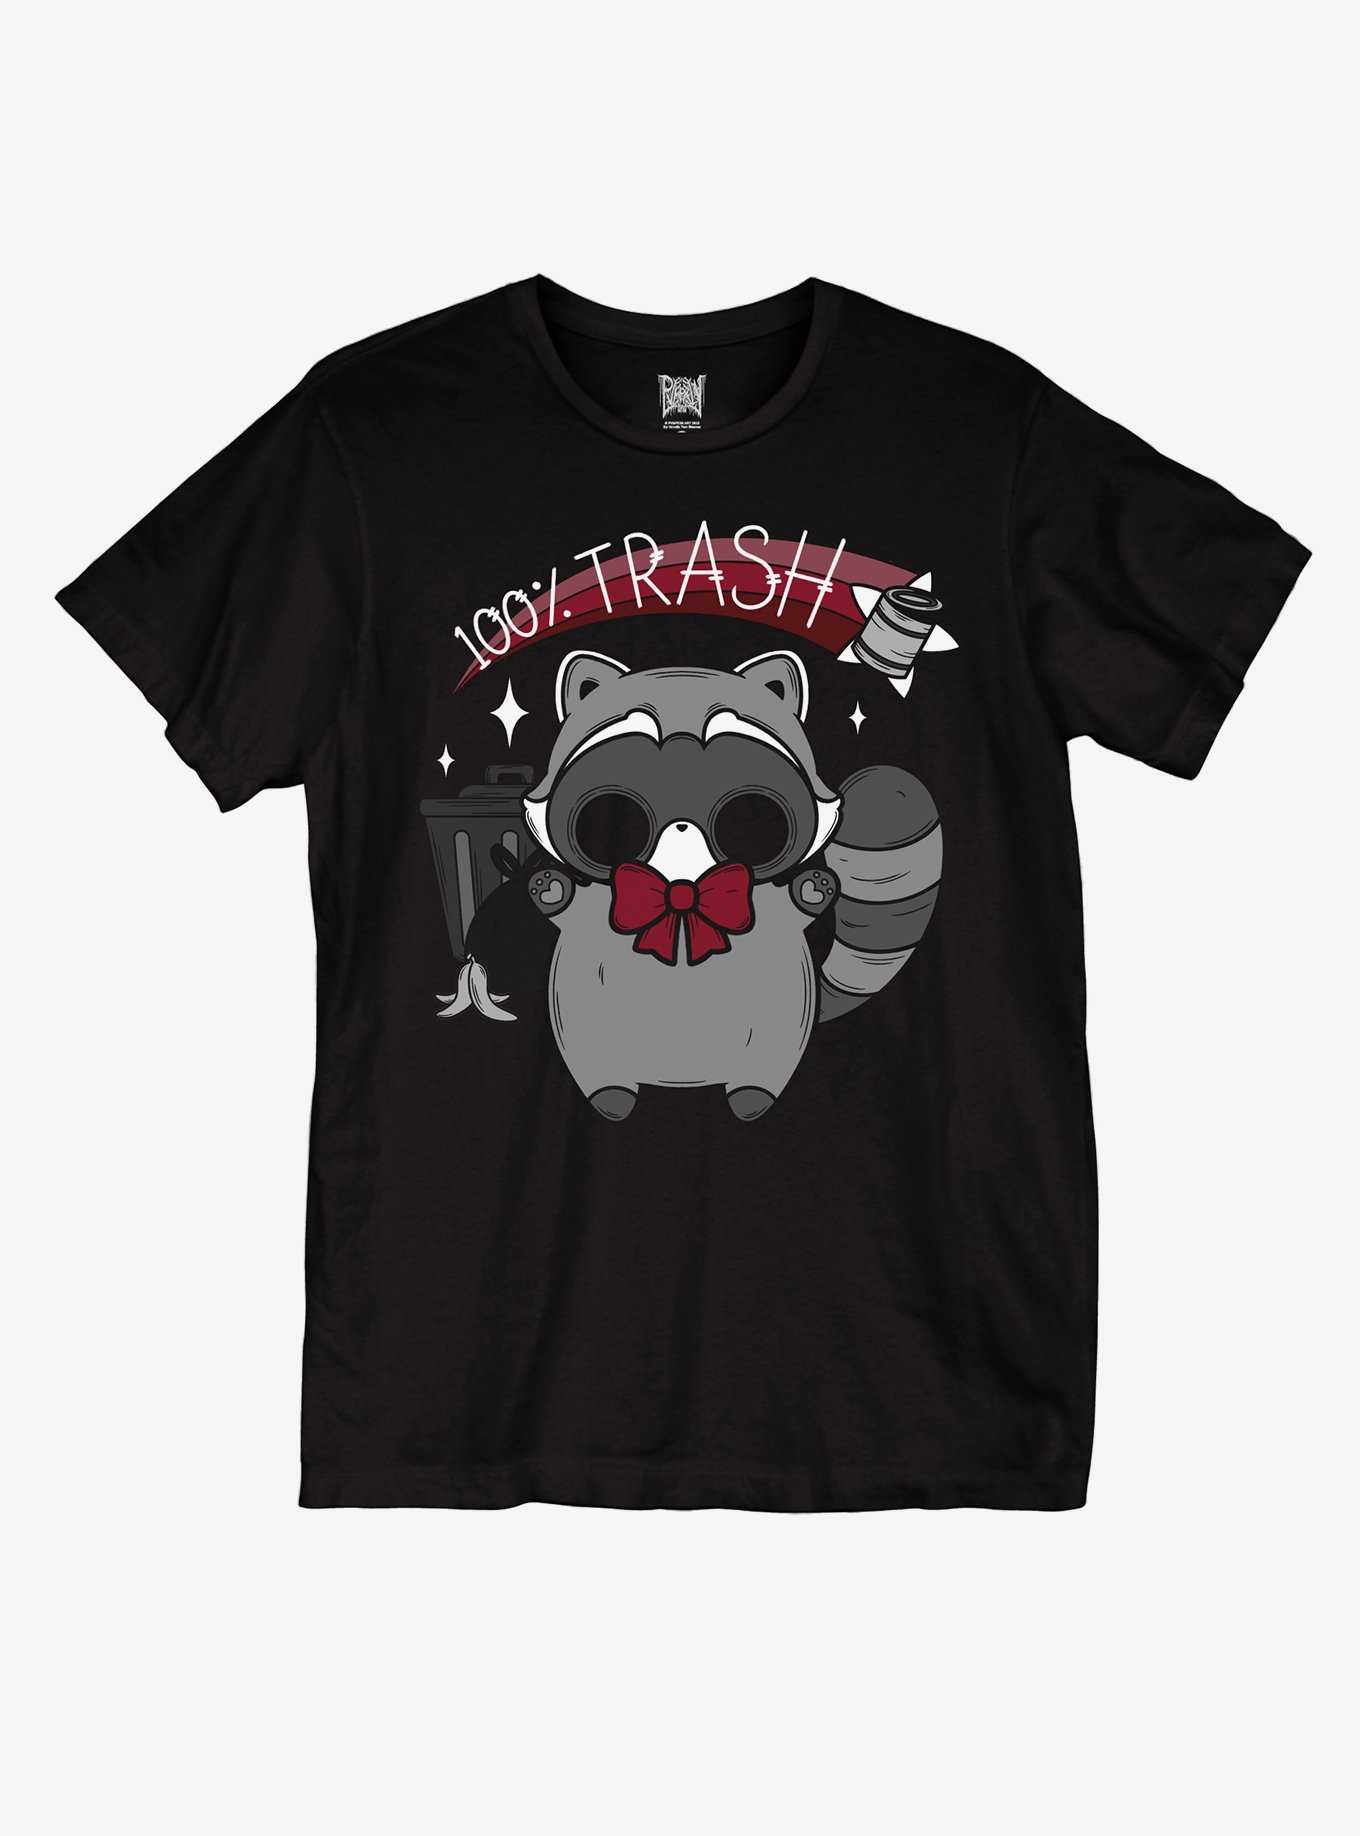 100% Trash Raccoon Boyfriend Fit Girls T-Shirt By Pvmpkin, , hi-res